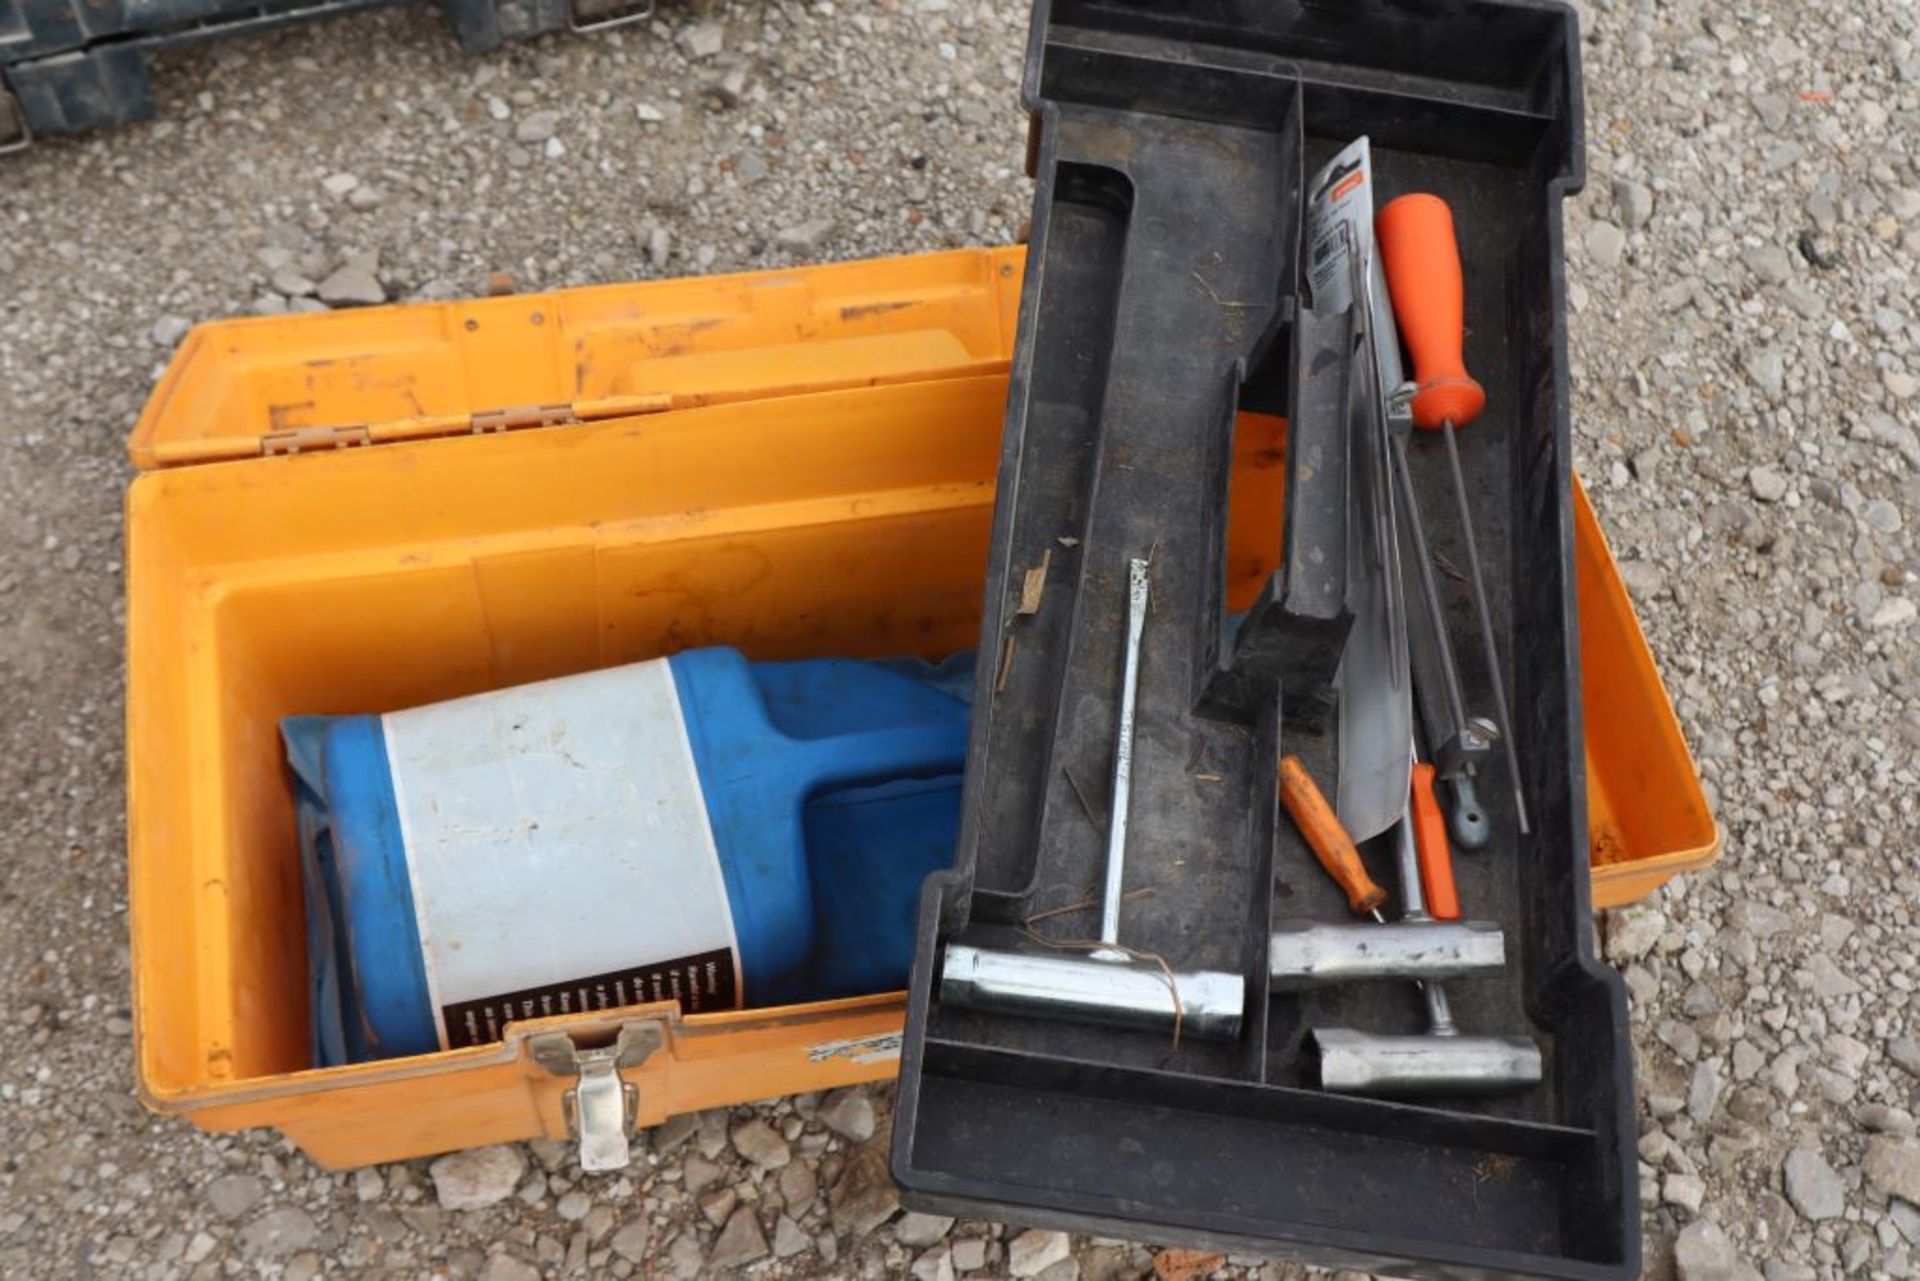 Stihl MS171 chainsaw & tools, yellow box. - Image 2 of 3